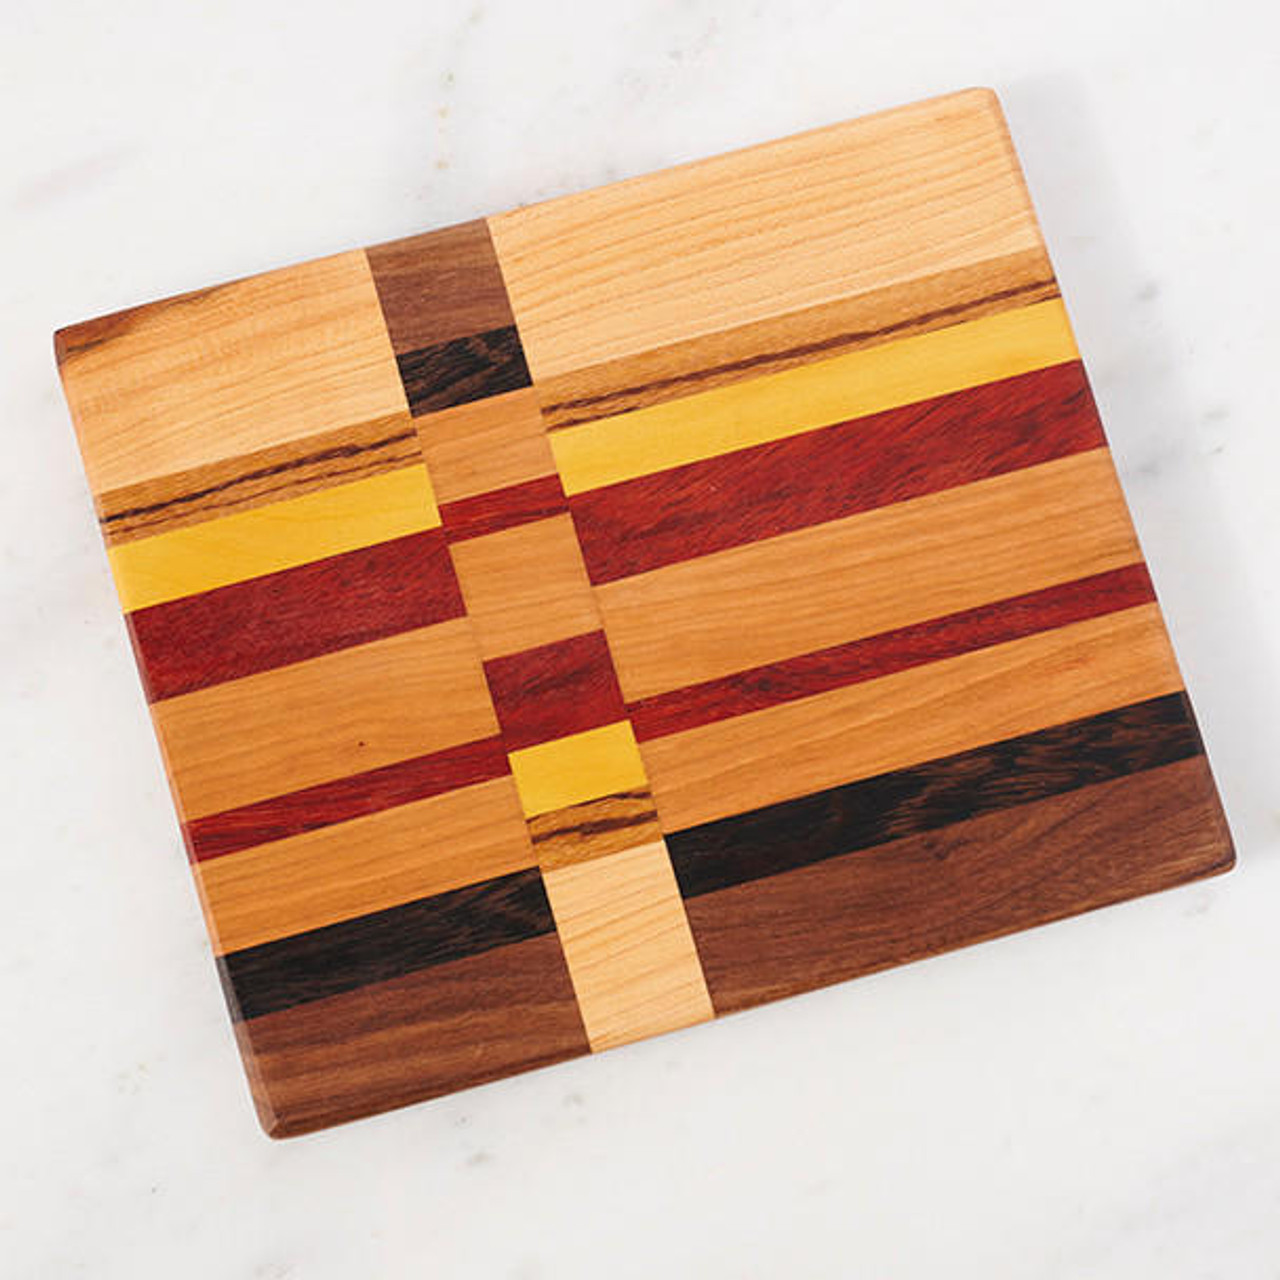 Handmade Cutting Board - Small